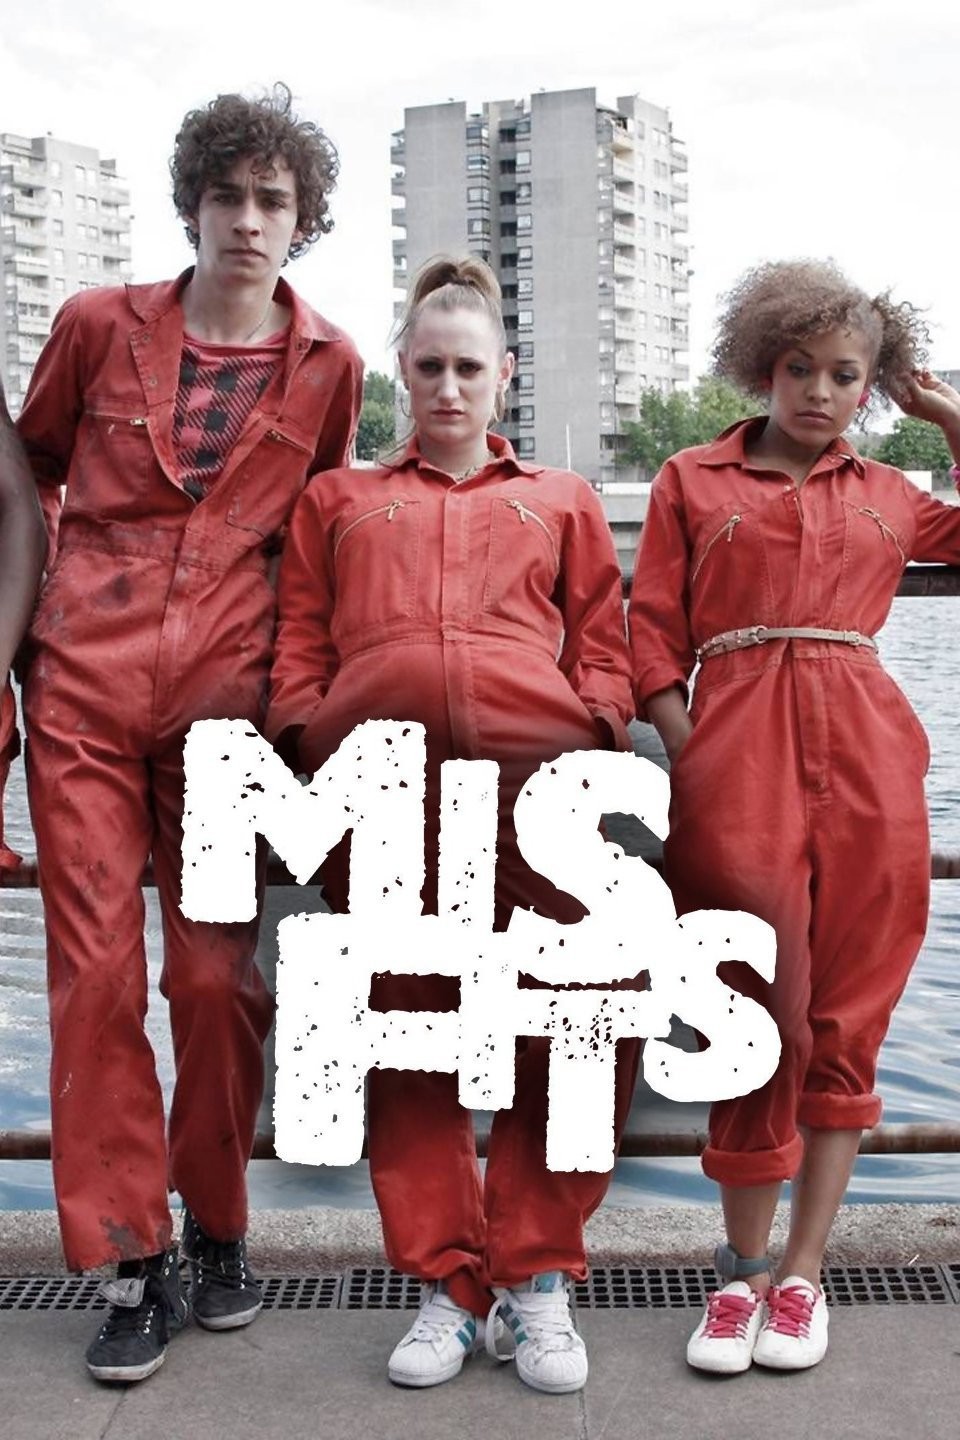 Misfits - Series 1 [DVD] [Import]　(shin